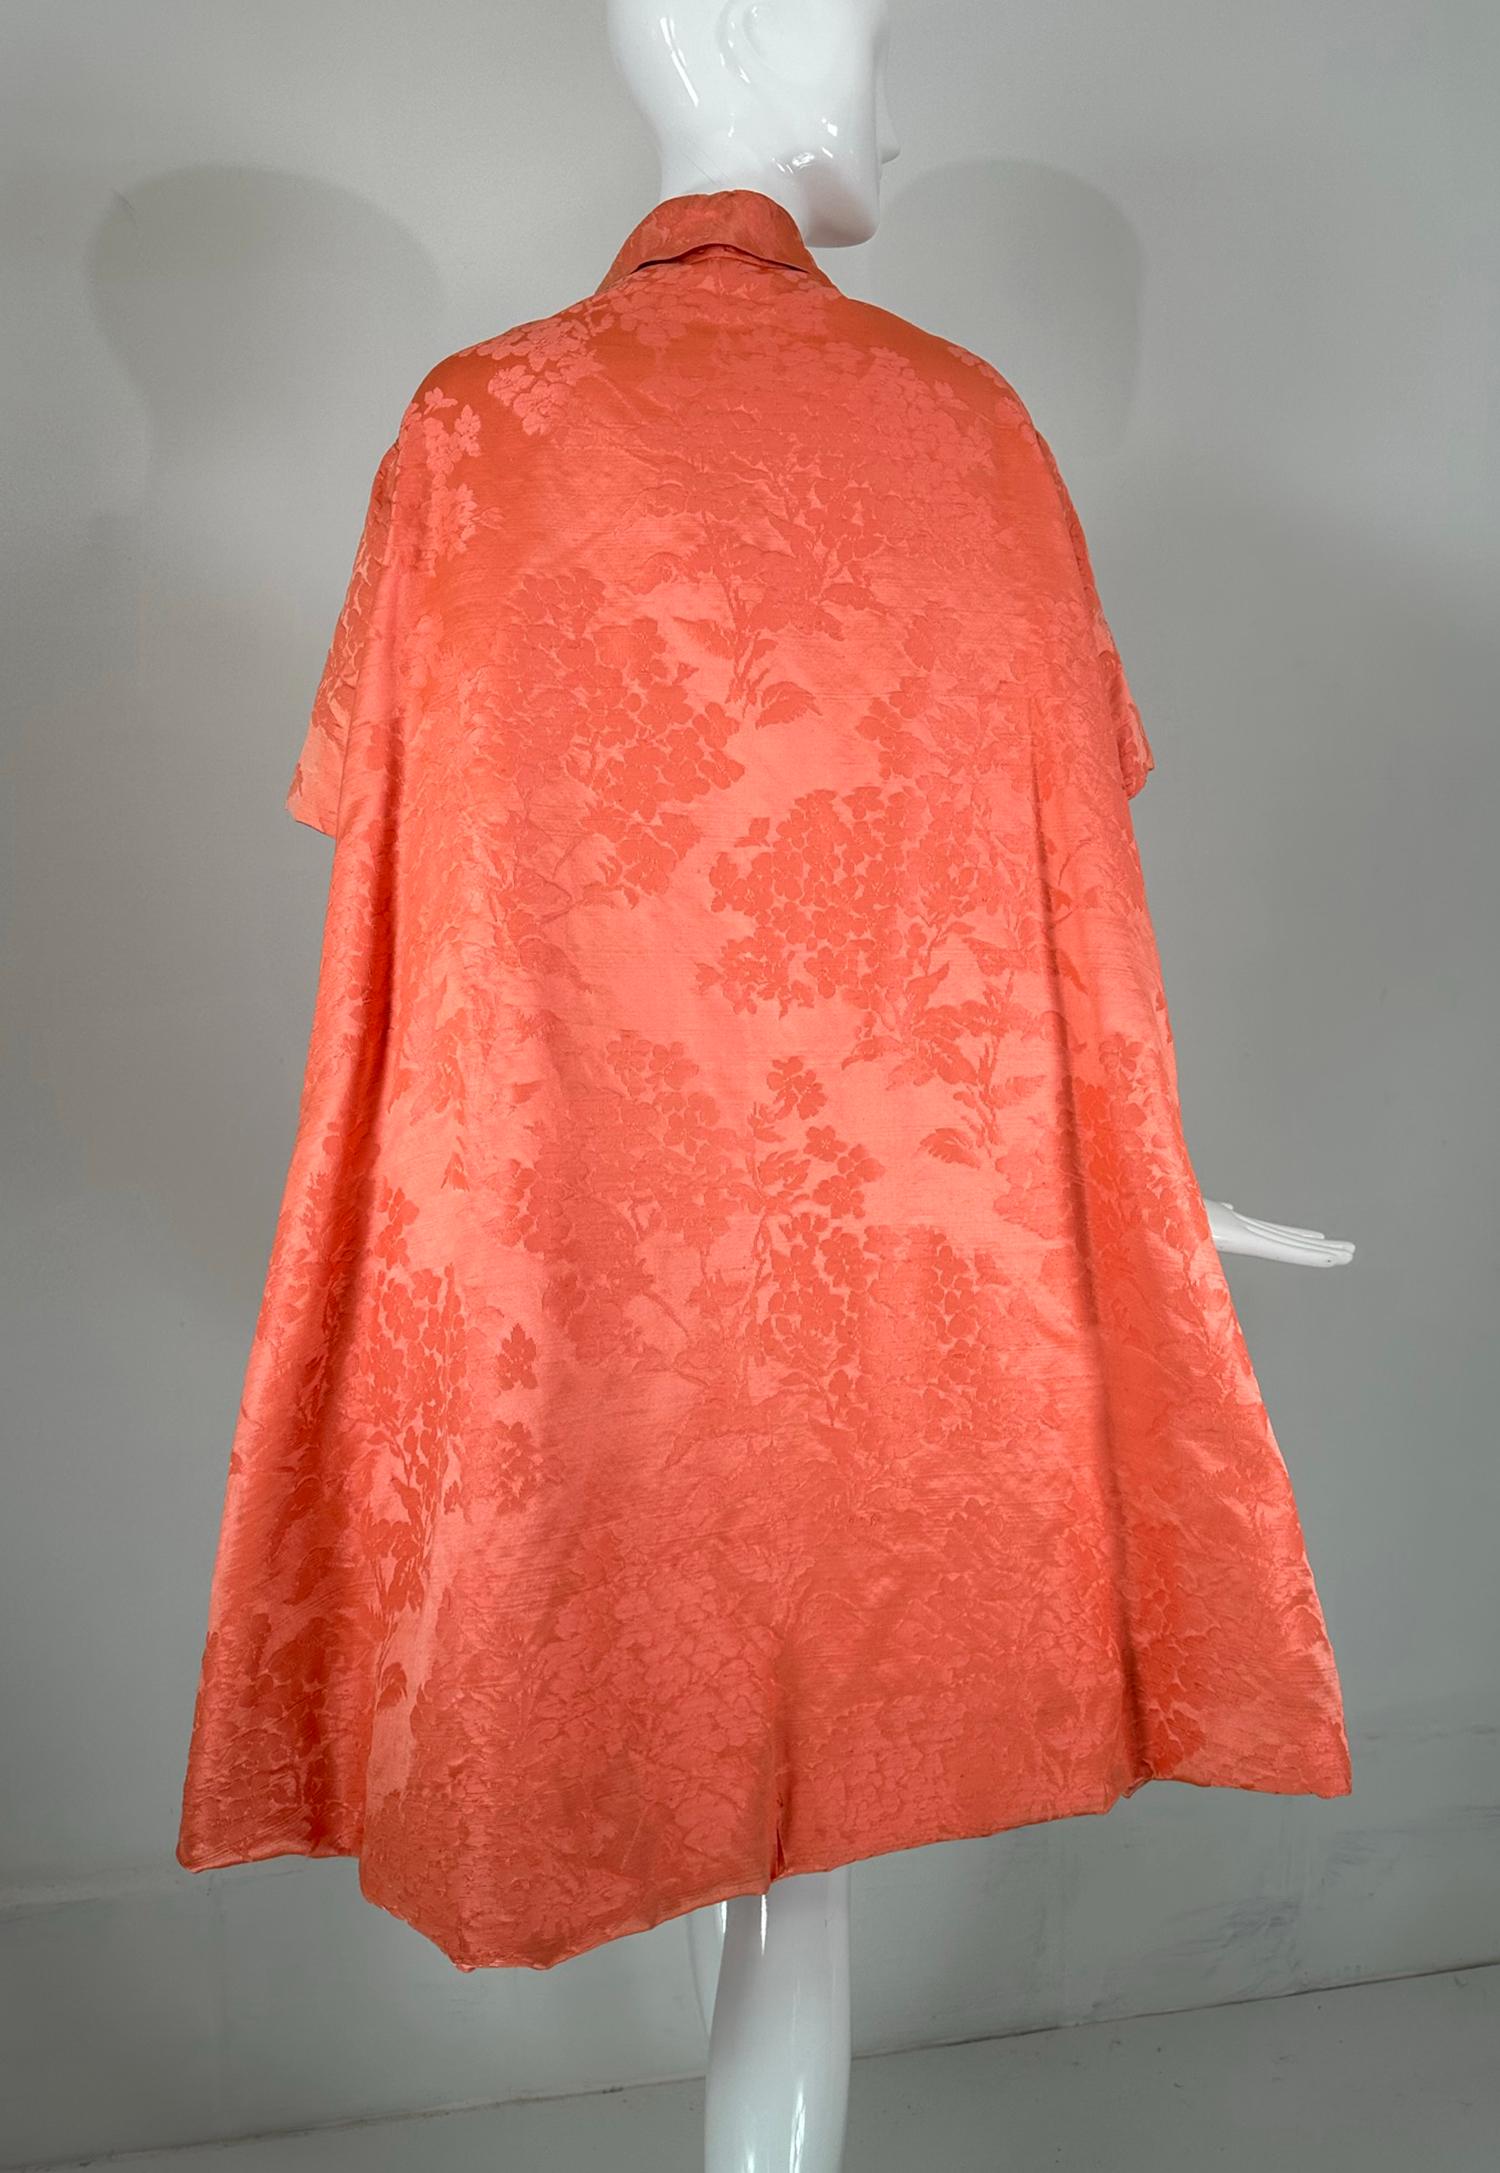 Lanvin Castello Haute Couture Coral Silk Brocade Coat & Dress Ensemble 1950s For Sale 8